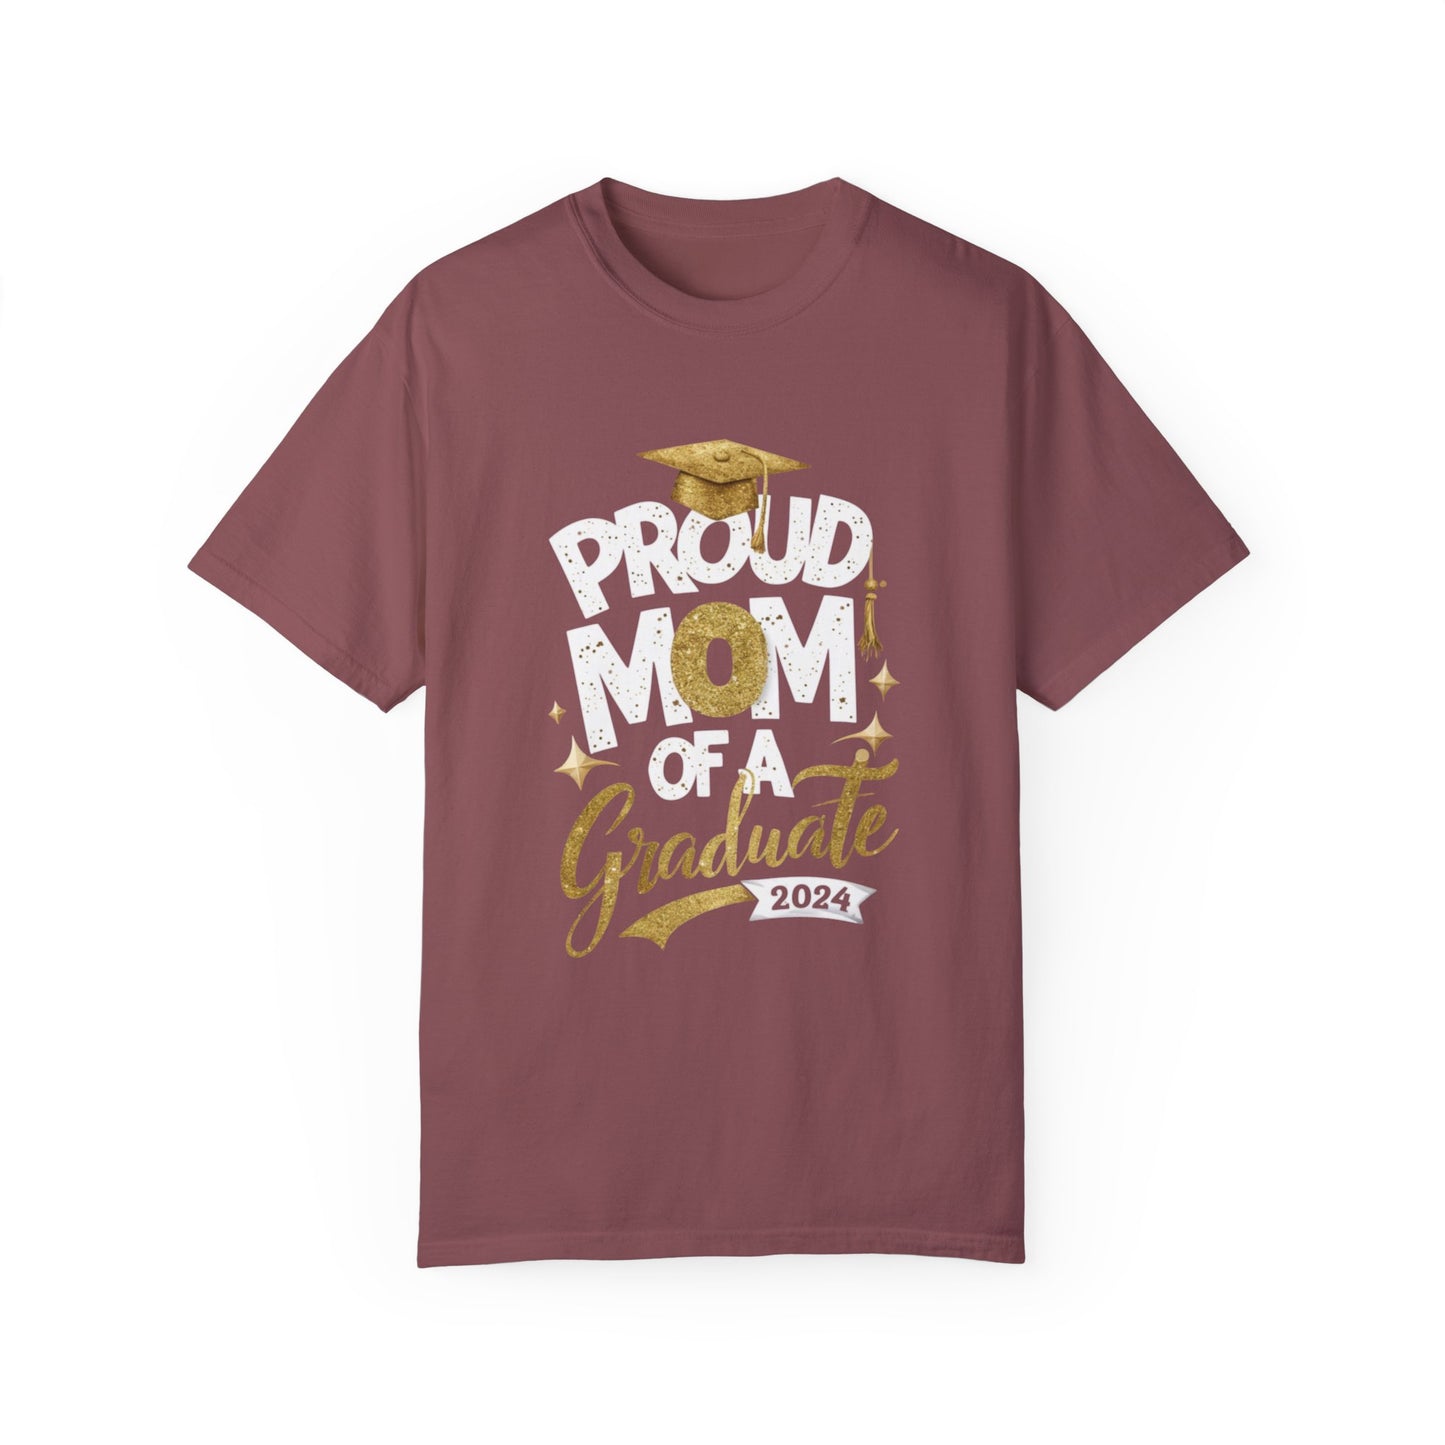 Proud Mom of a 2024 Graduate Unisex Garment-dyed T-shirt Cotton Funny Humorous Graphic Soft Premium Unisex Men Women Brick T-shirt Birthday Gift-5